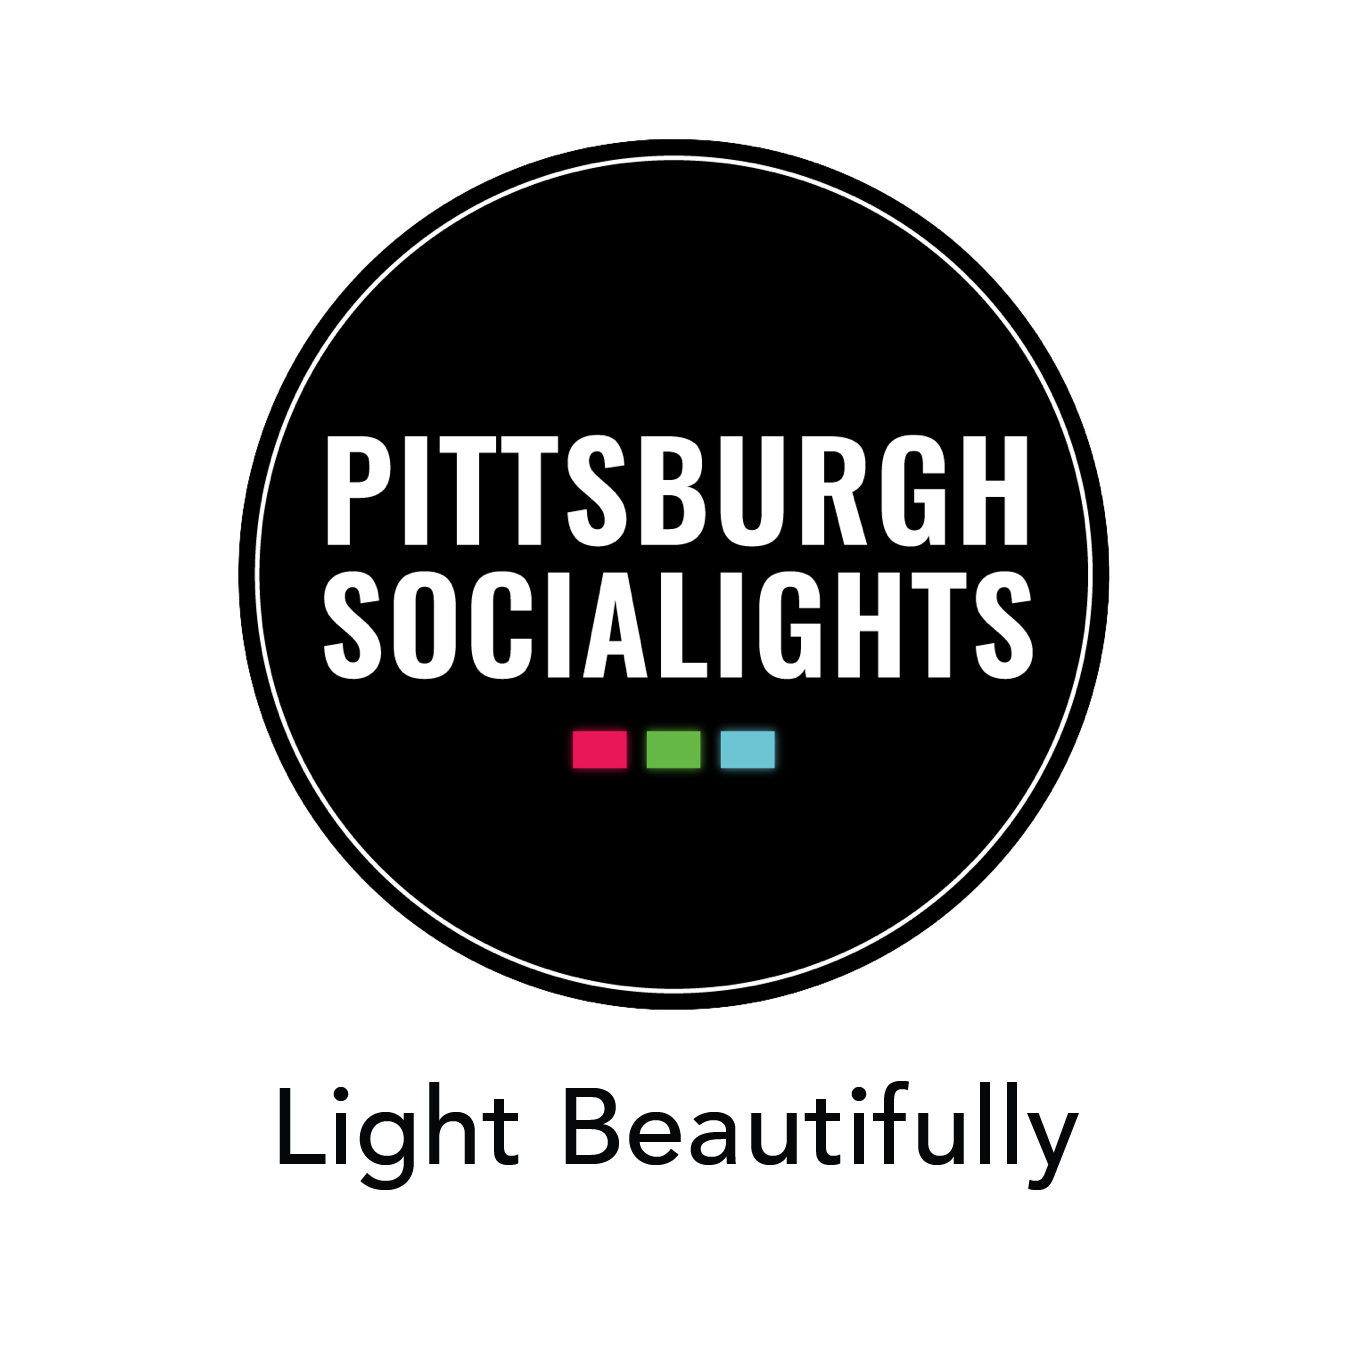 Socialights Logo with Tagline_transparent_4.26.22.png